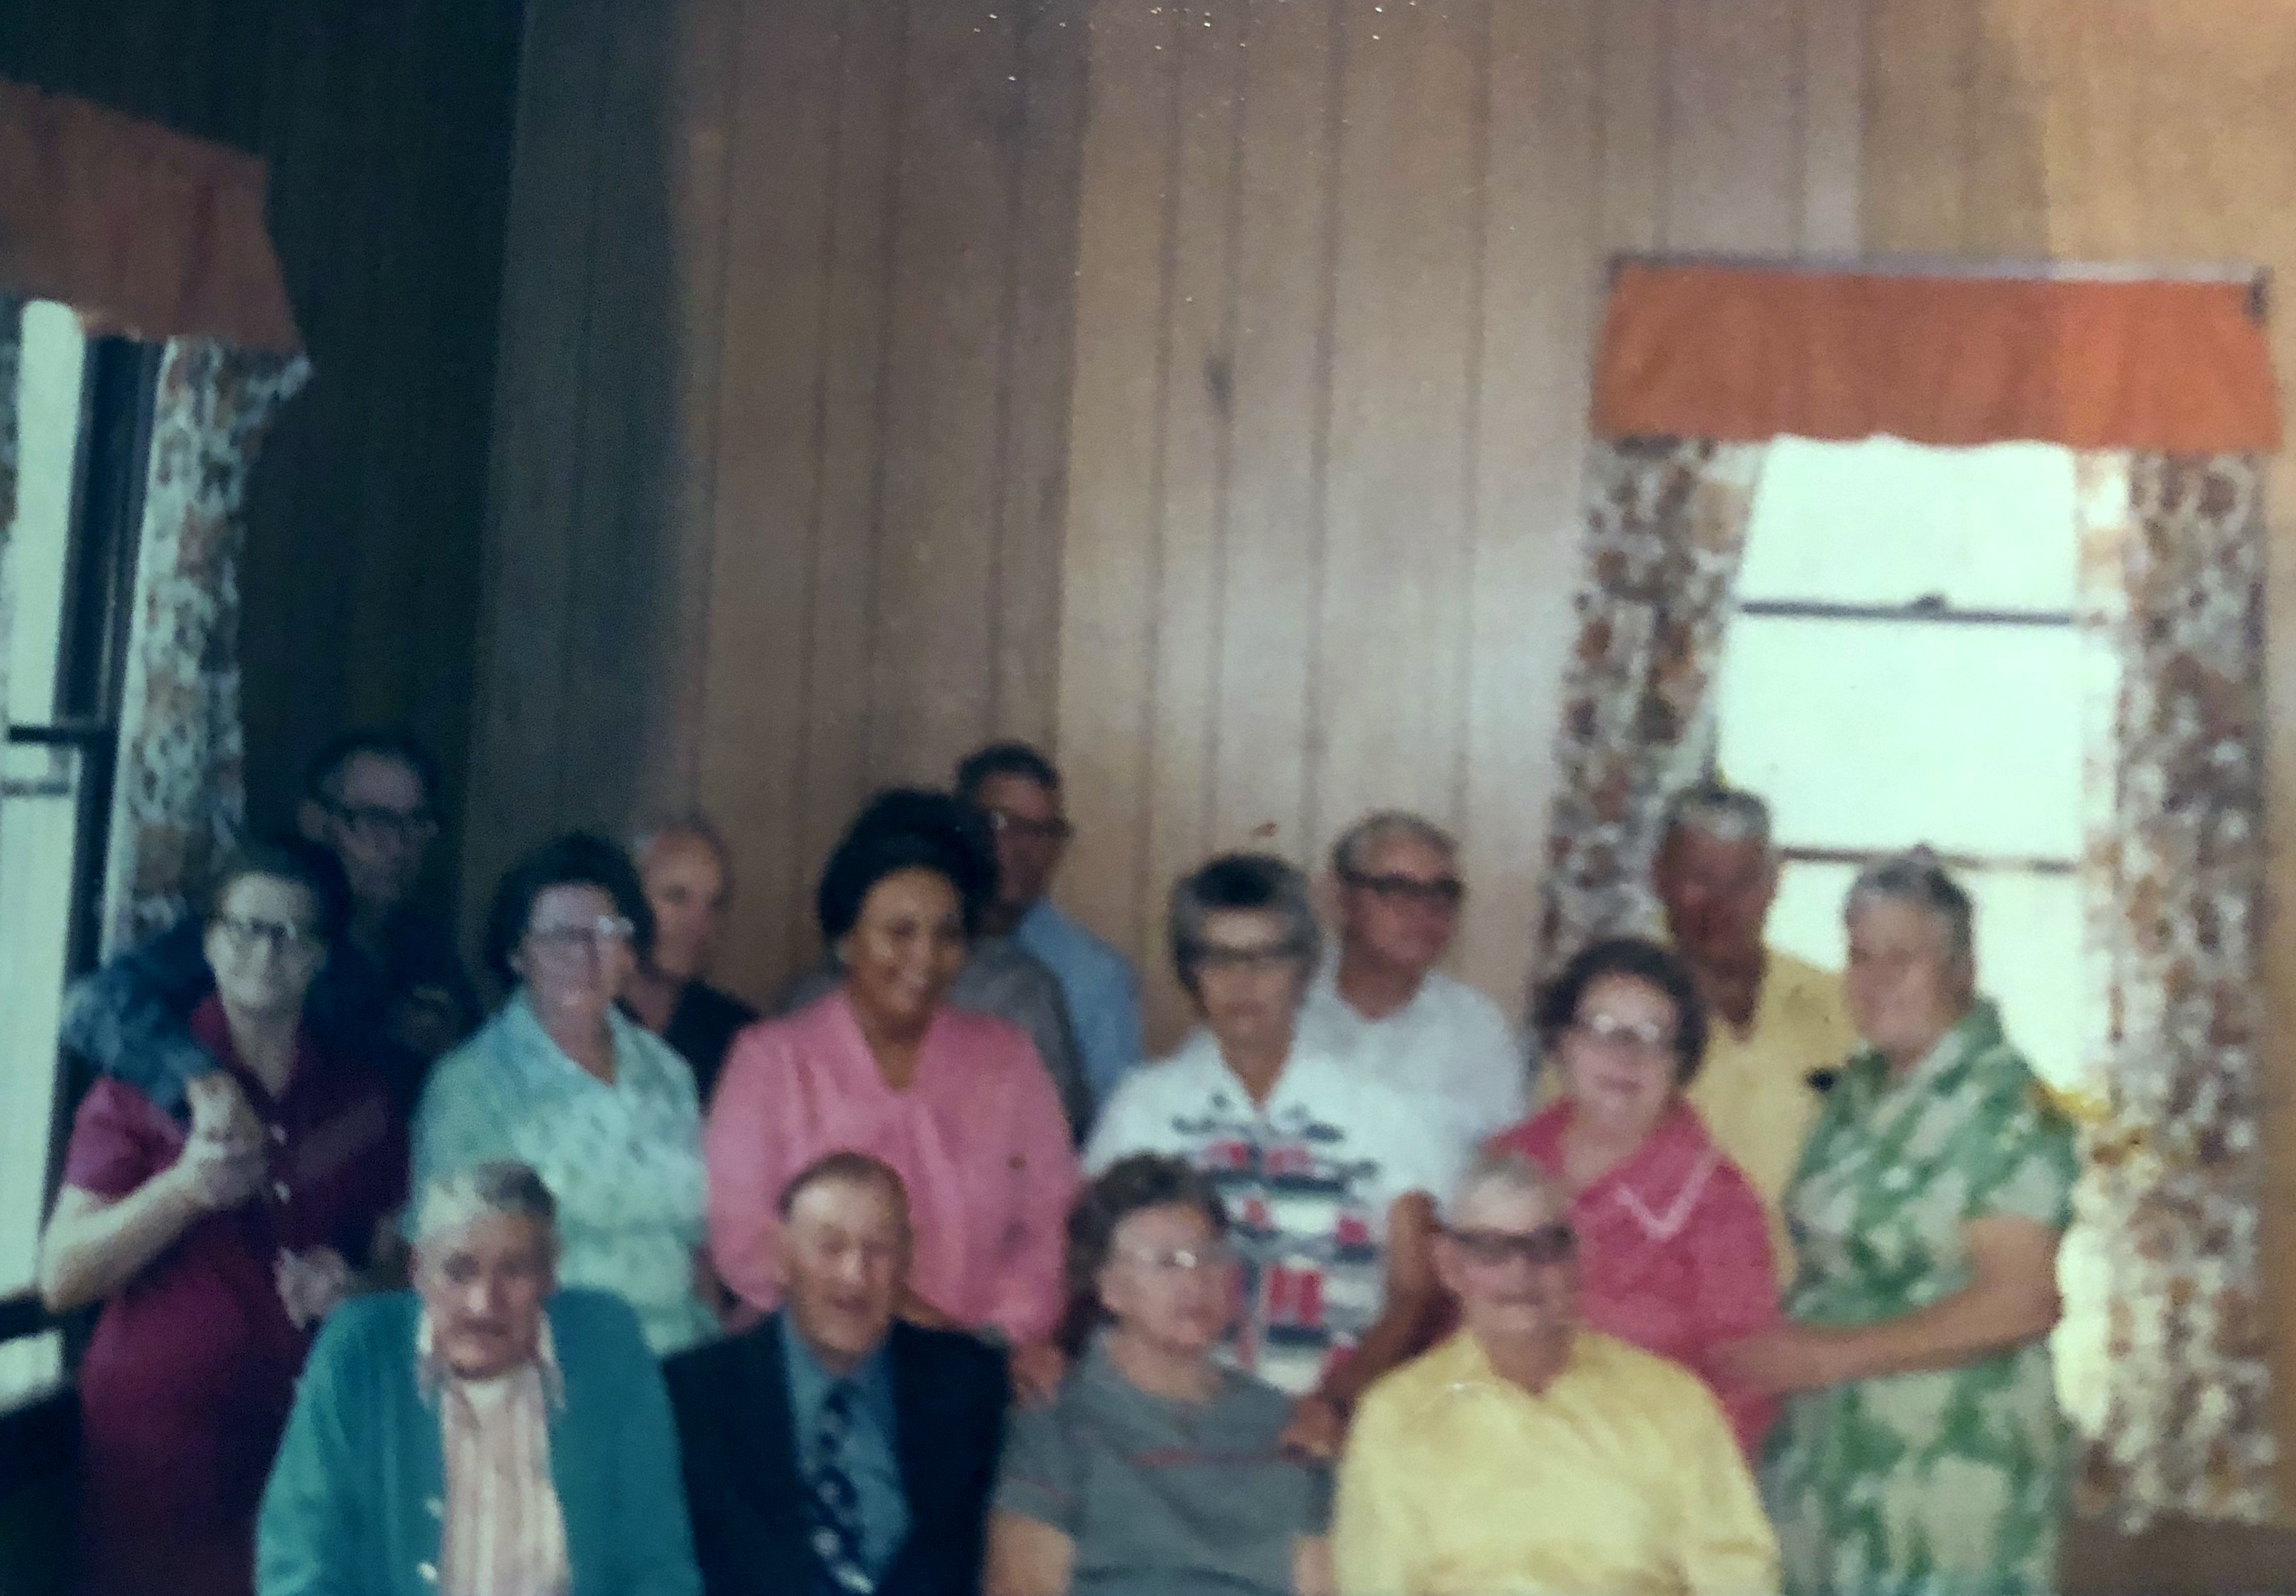 Last picture of the 9 Nowlin taken 1977 Thanksgiving dinner VFW Hall in Anadarko. 